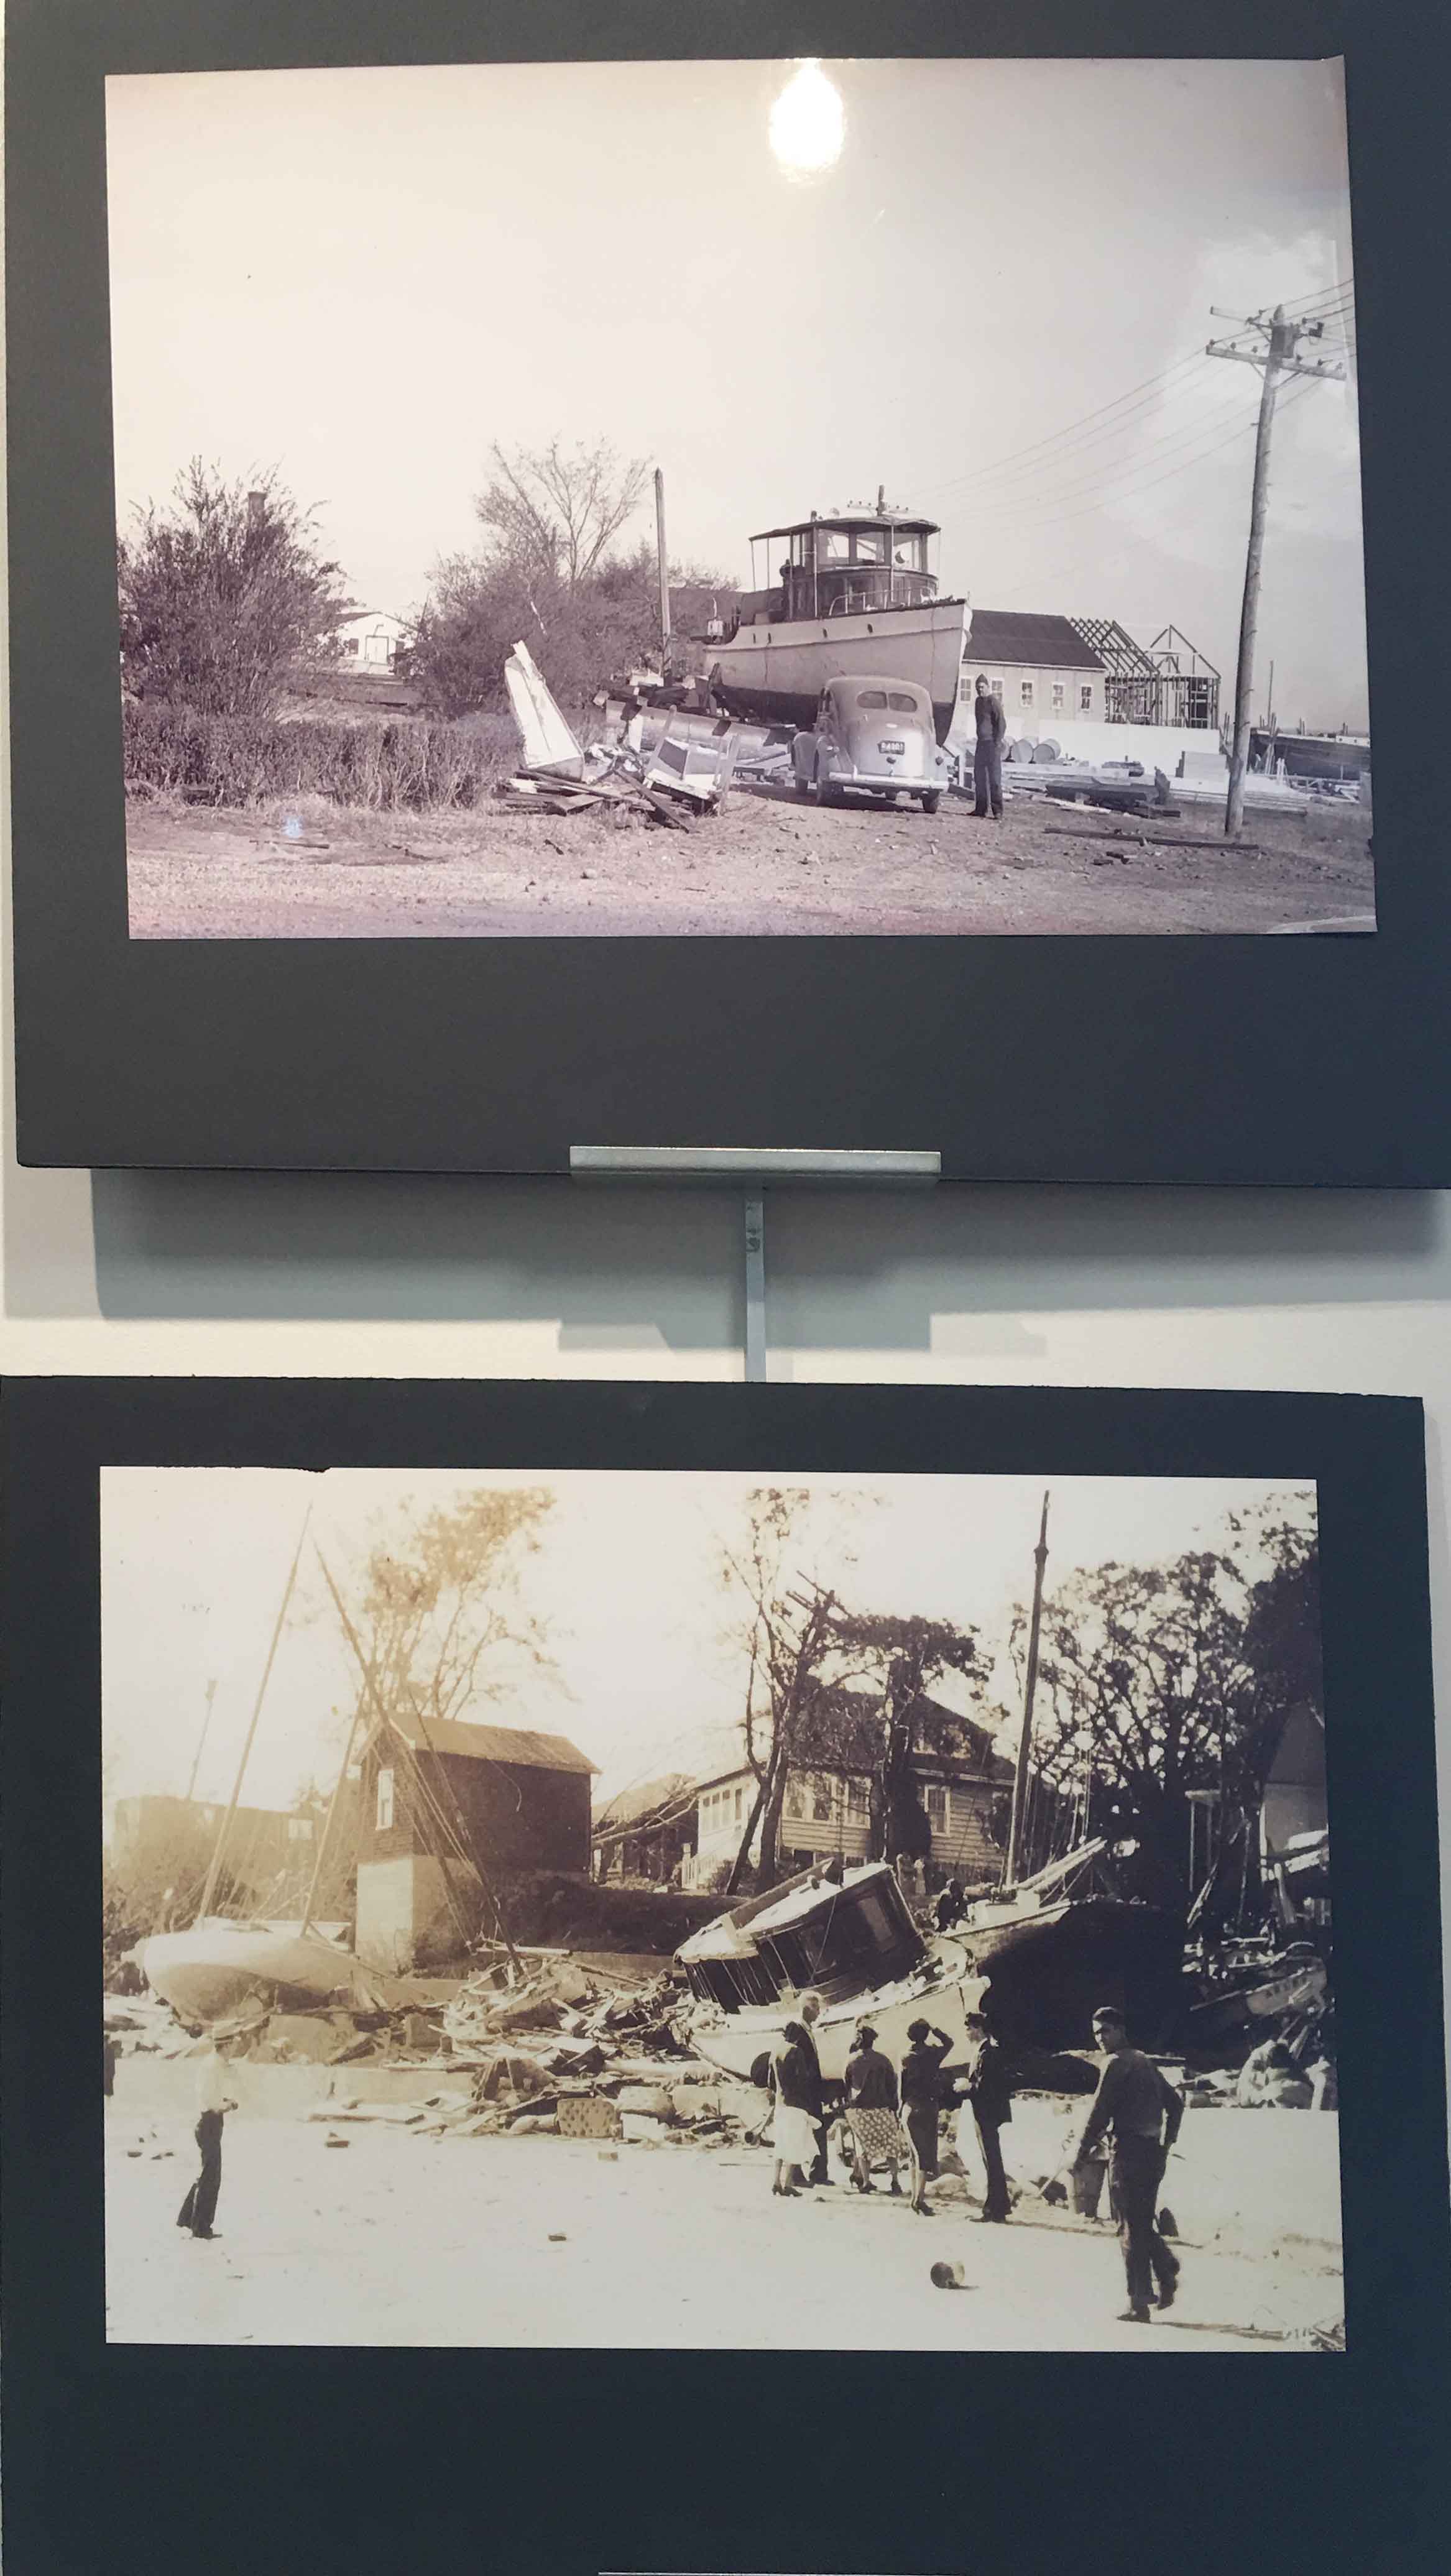 1938 Hurricane photos and diary entries…